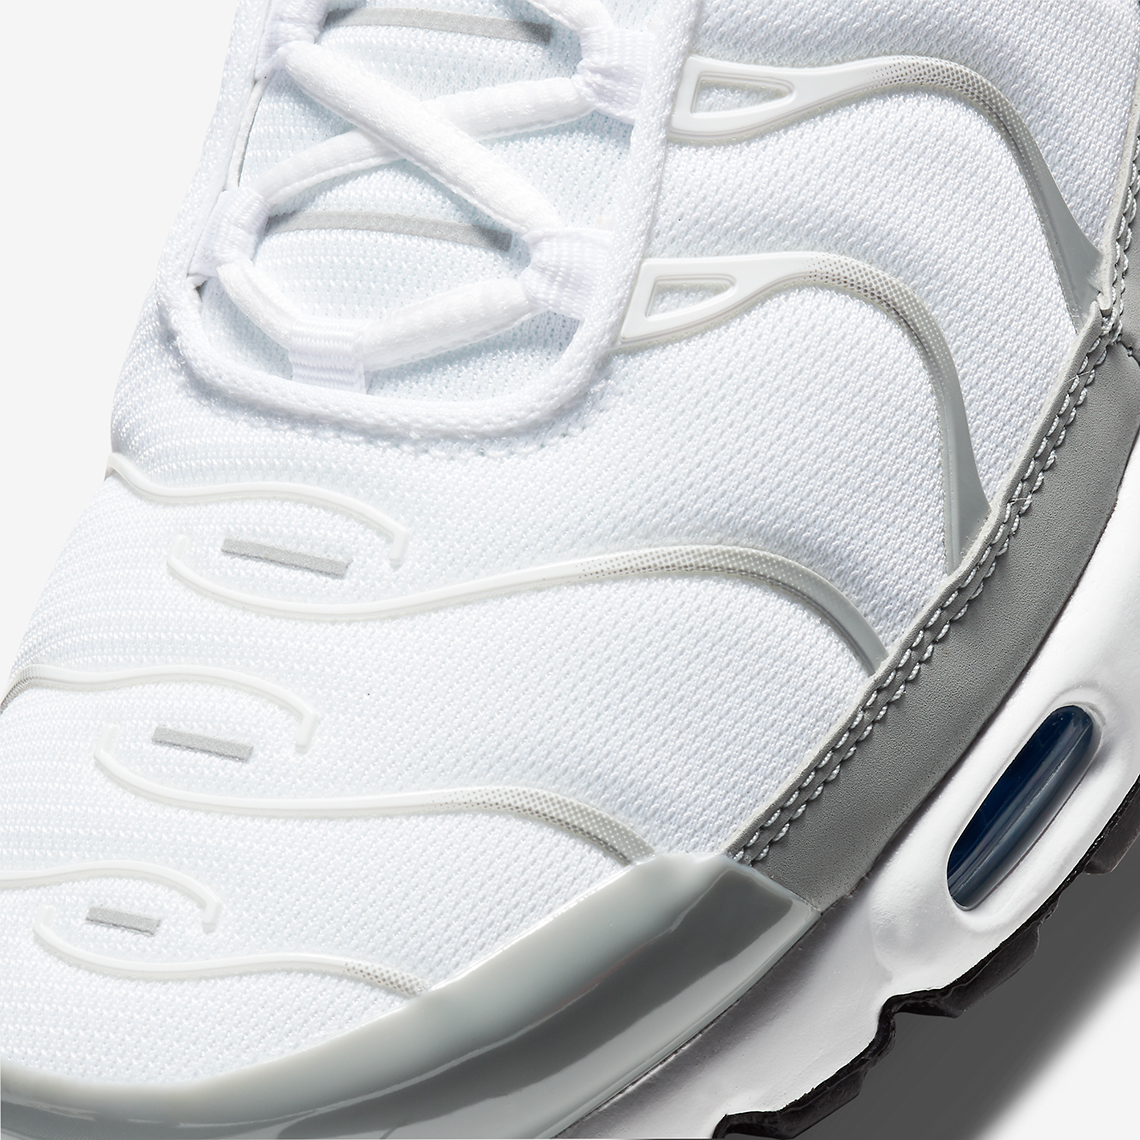 Nike Air Max Plus Laser Blue DC0956-100 Release Info | SneakerNews.com